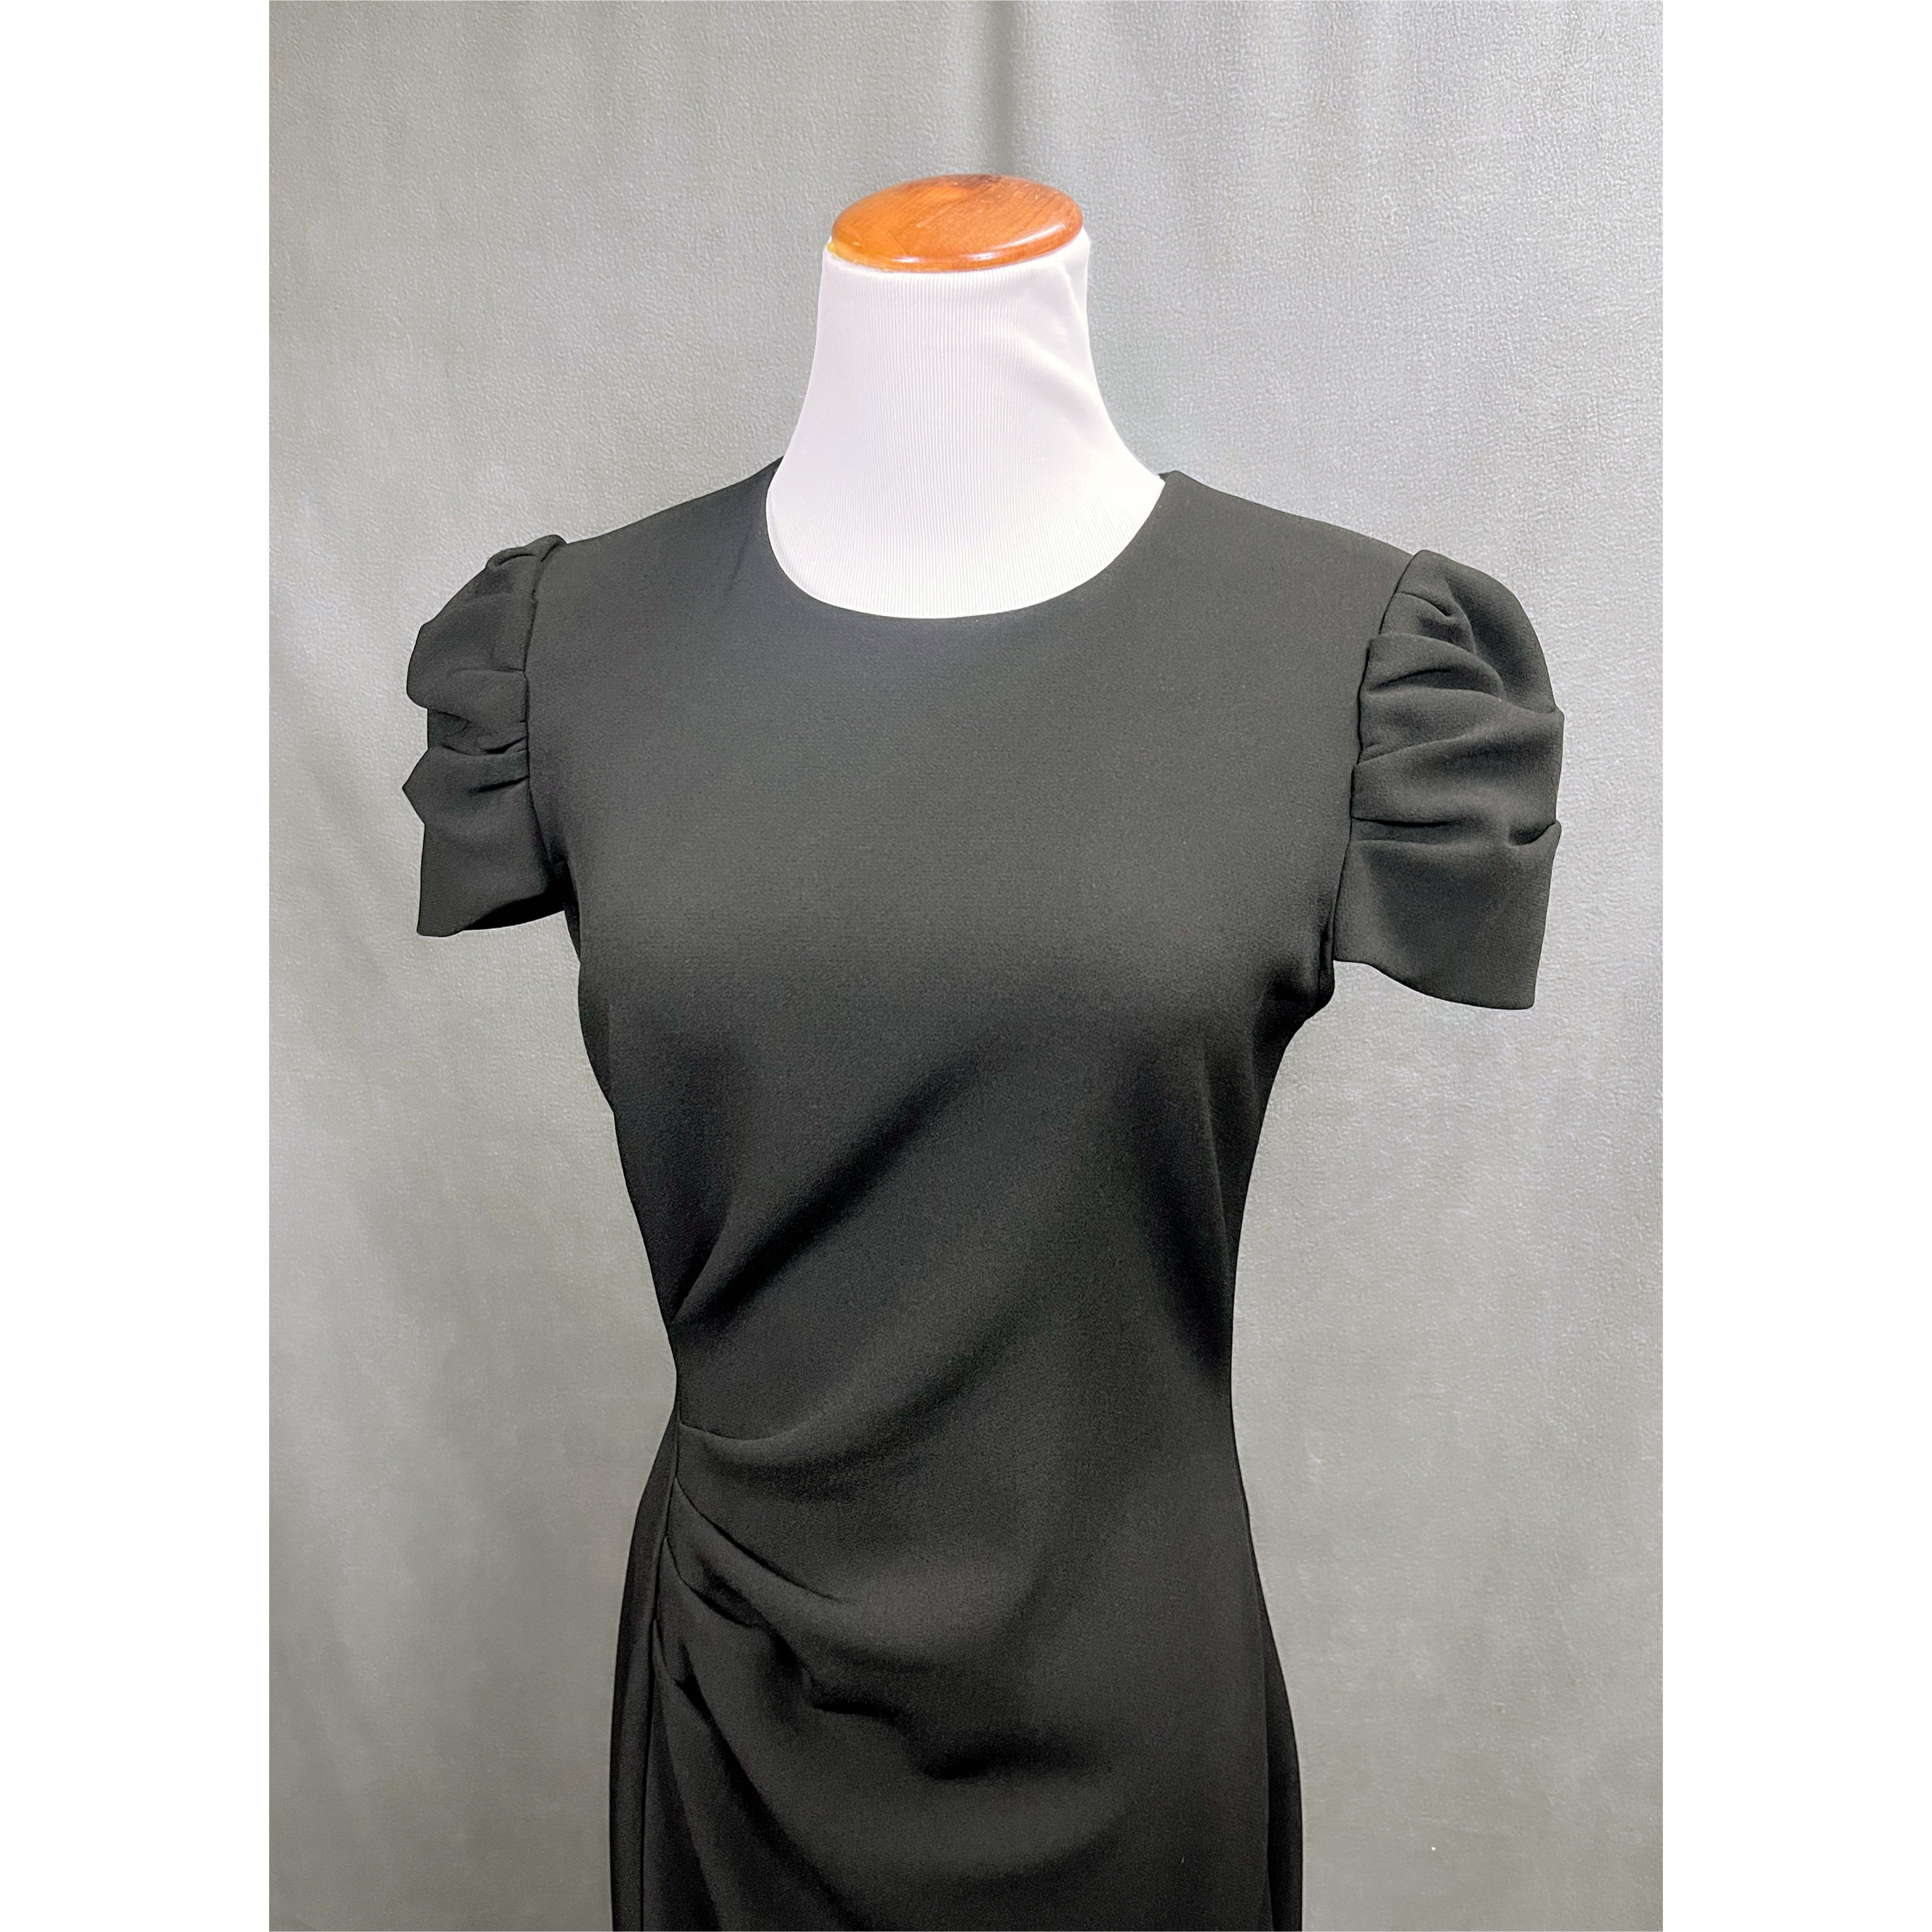 Shoshana black Marise dress, size 6, NEW WITH TAGS!